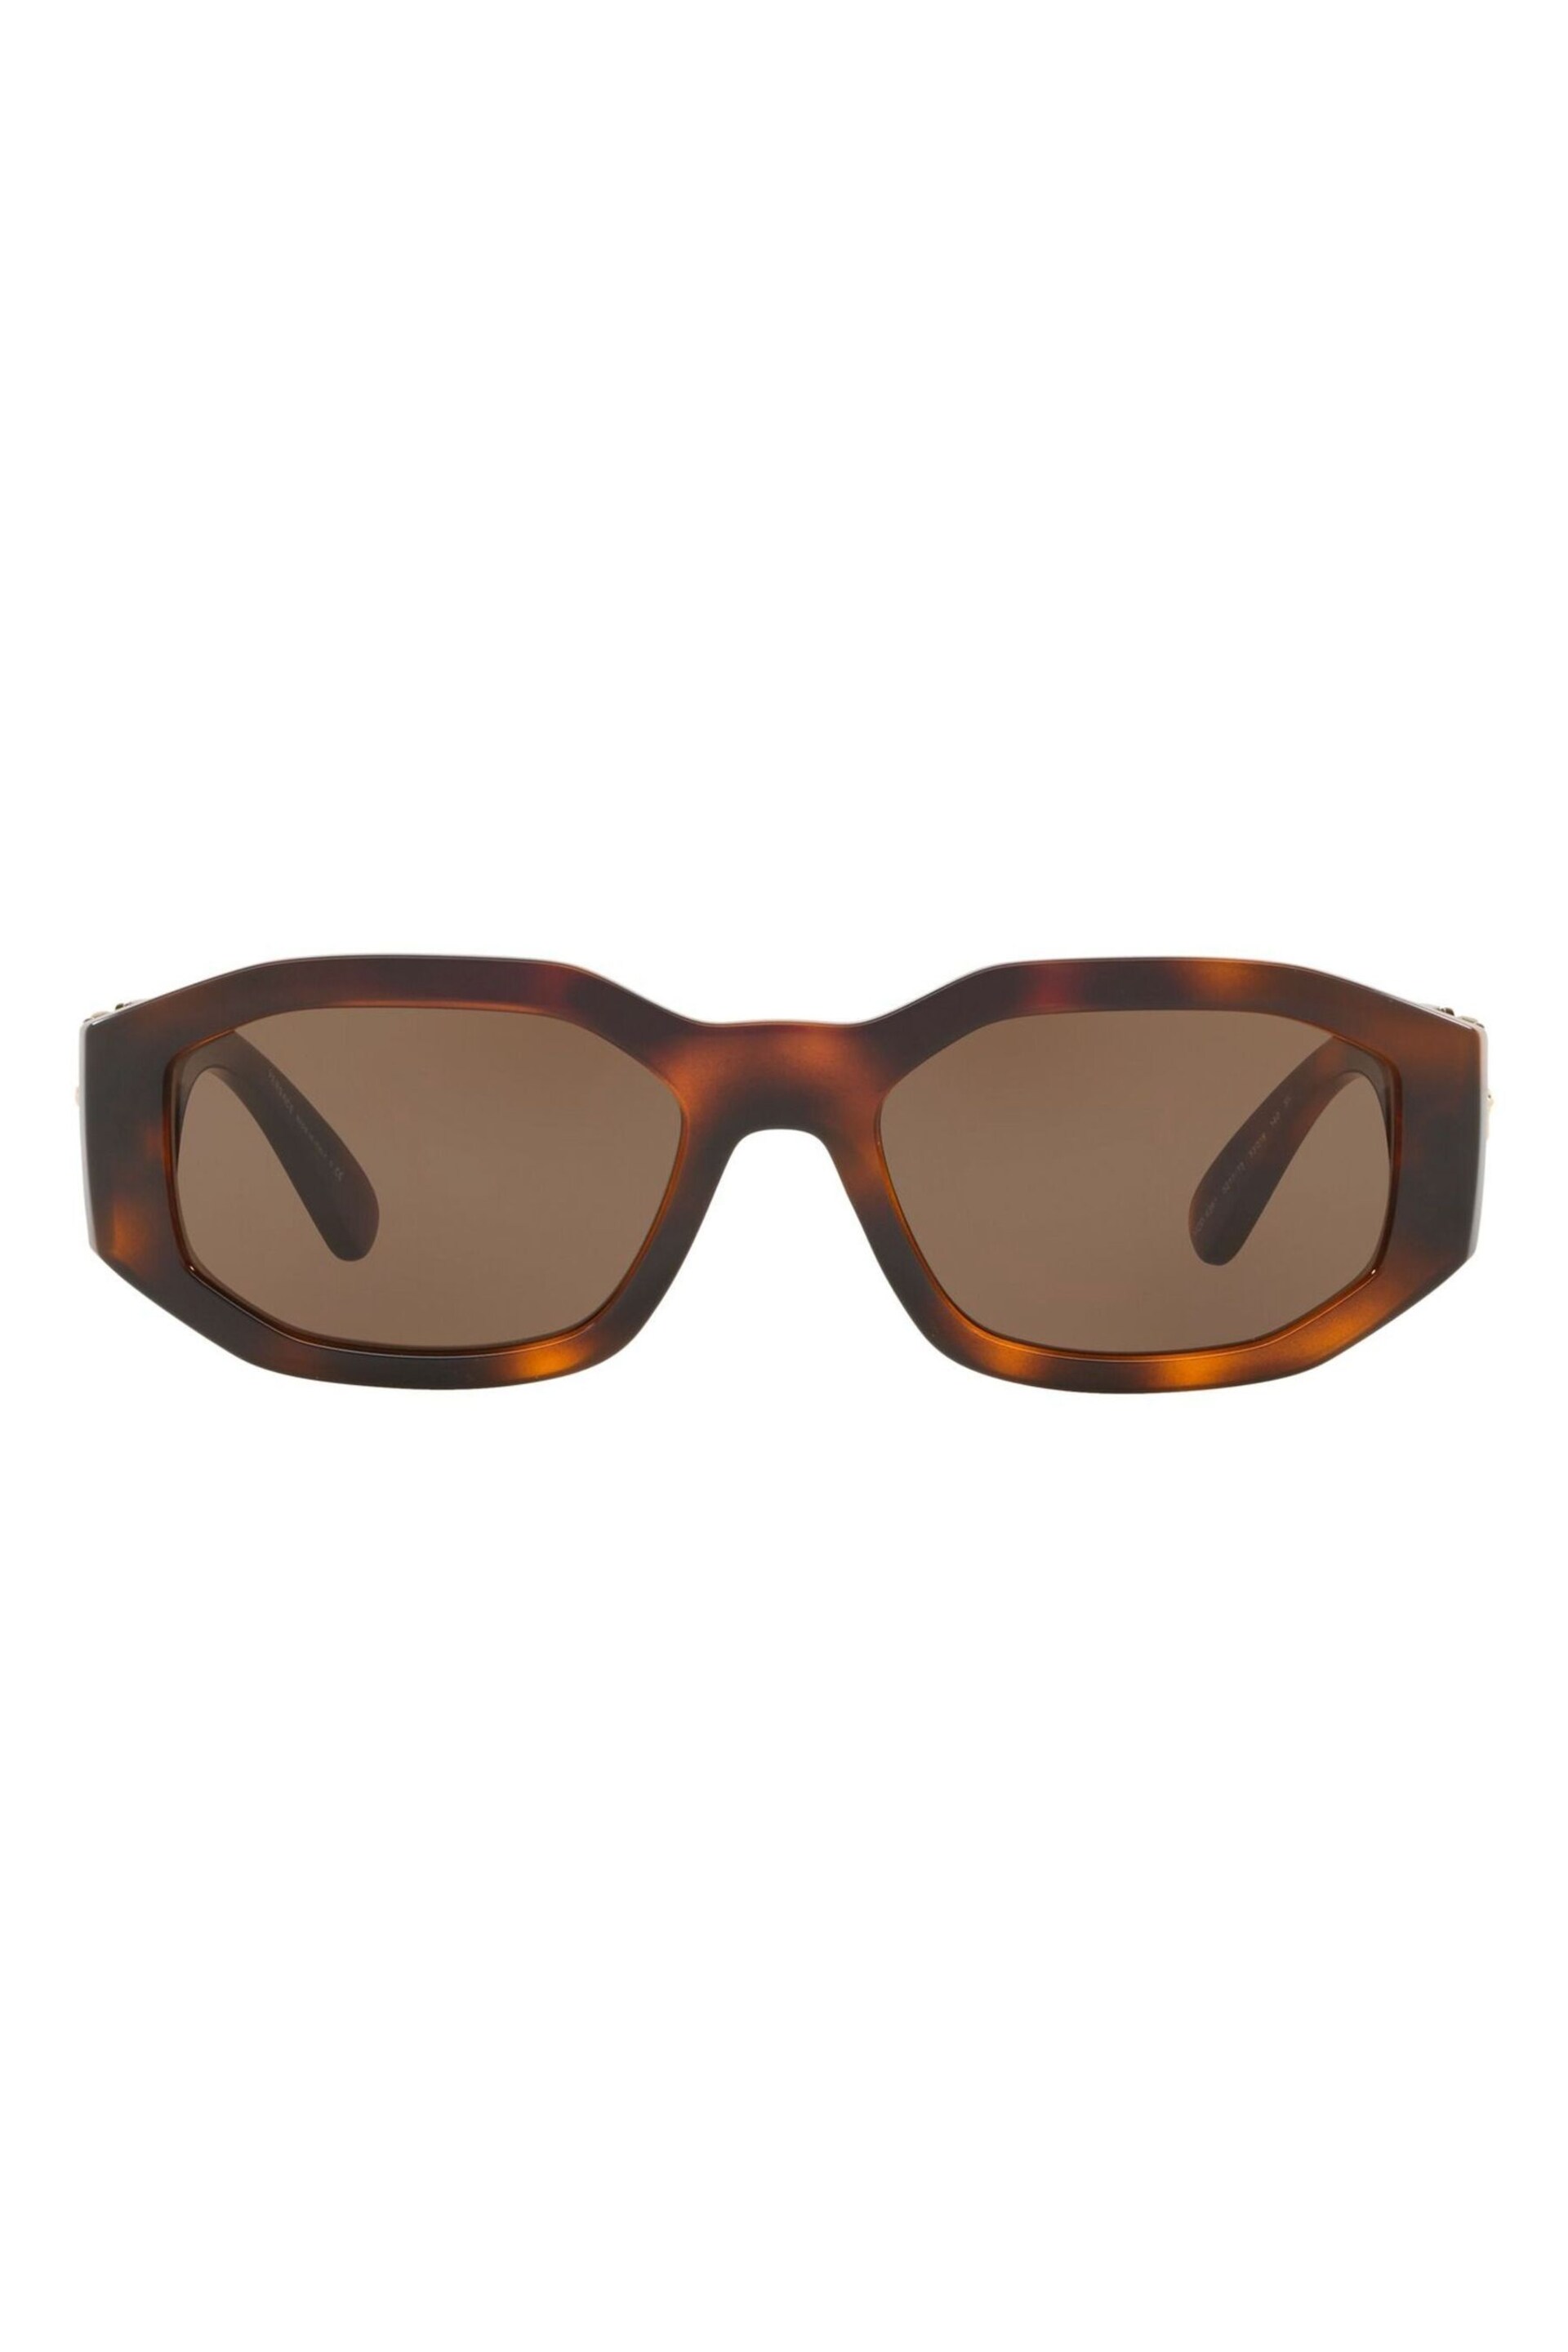 Versace Brown Medusa Biggie Sunglasses - Image 1 of 12